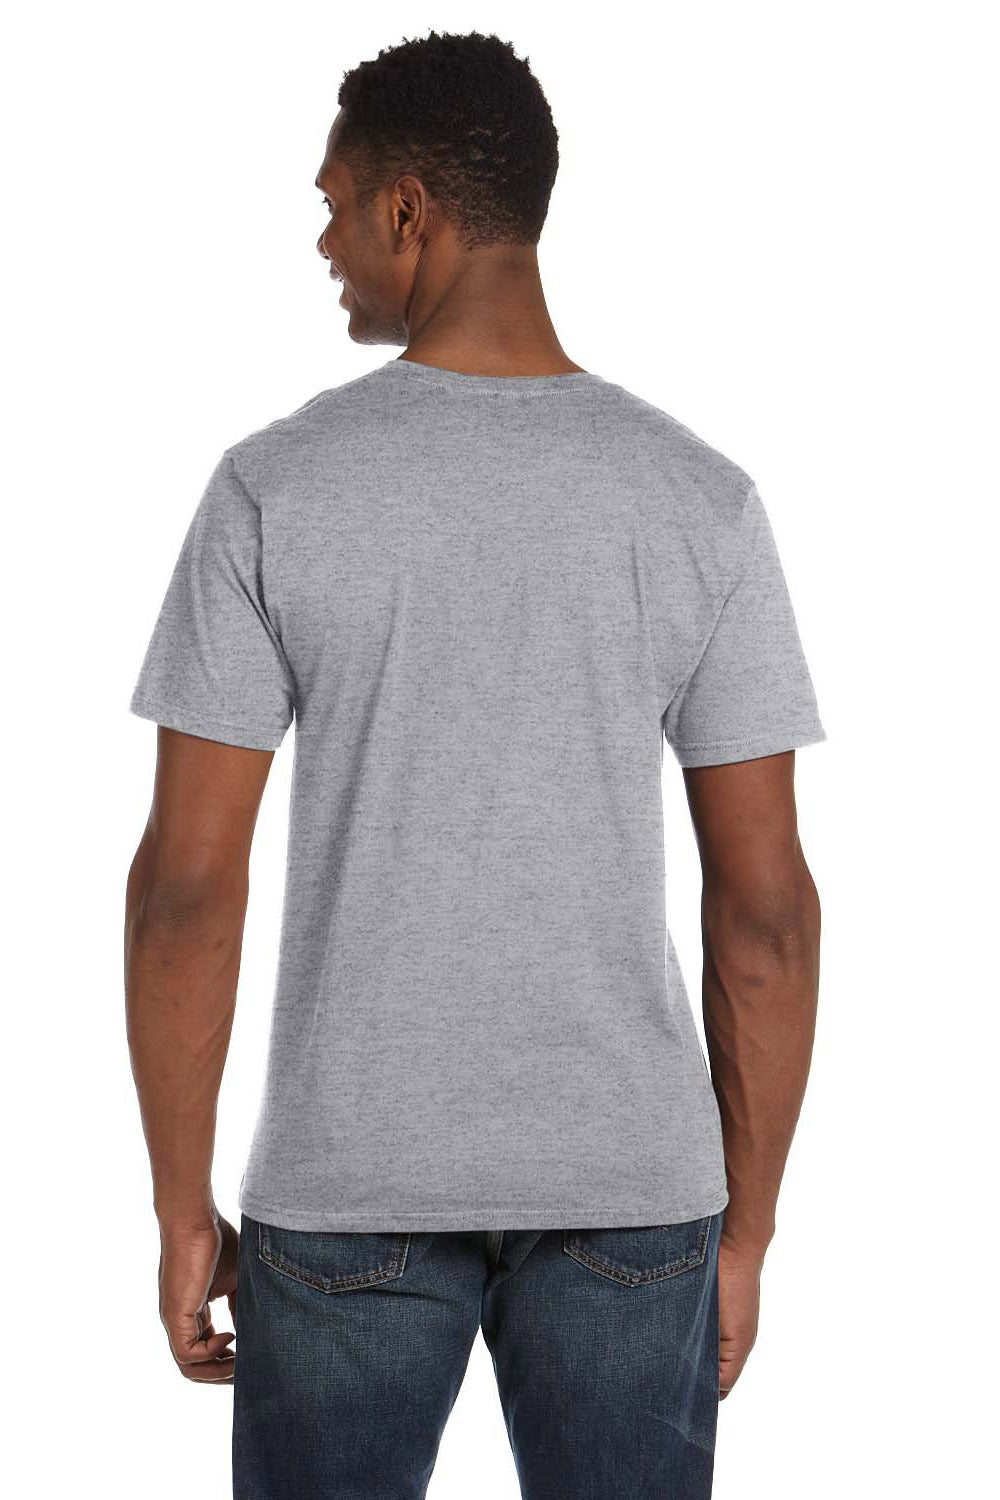 Anvil 982 Mens Short Sleeve V-Neck T-Shirt Heather Grey Back